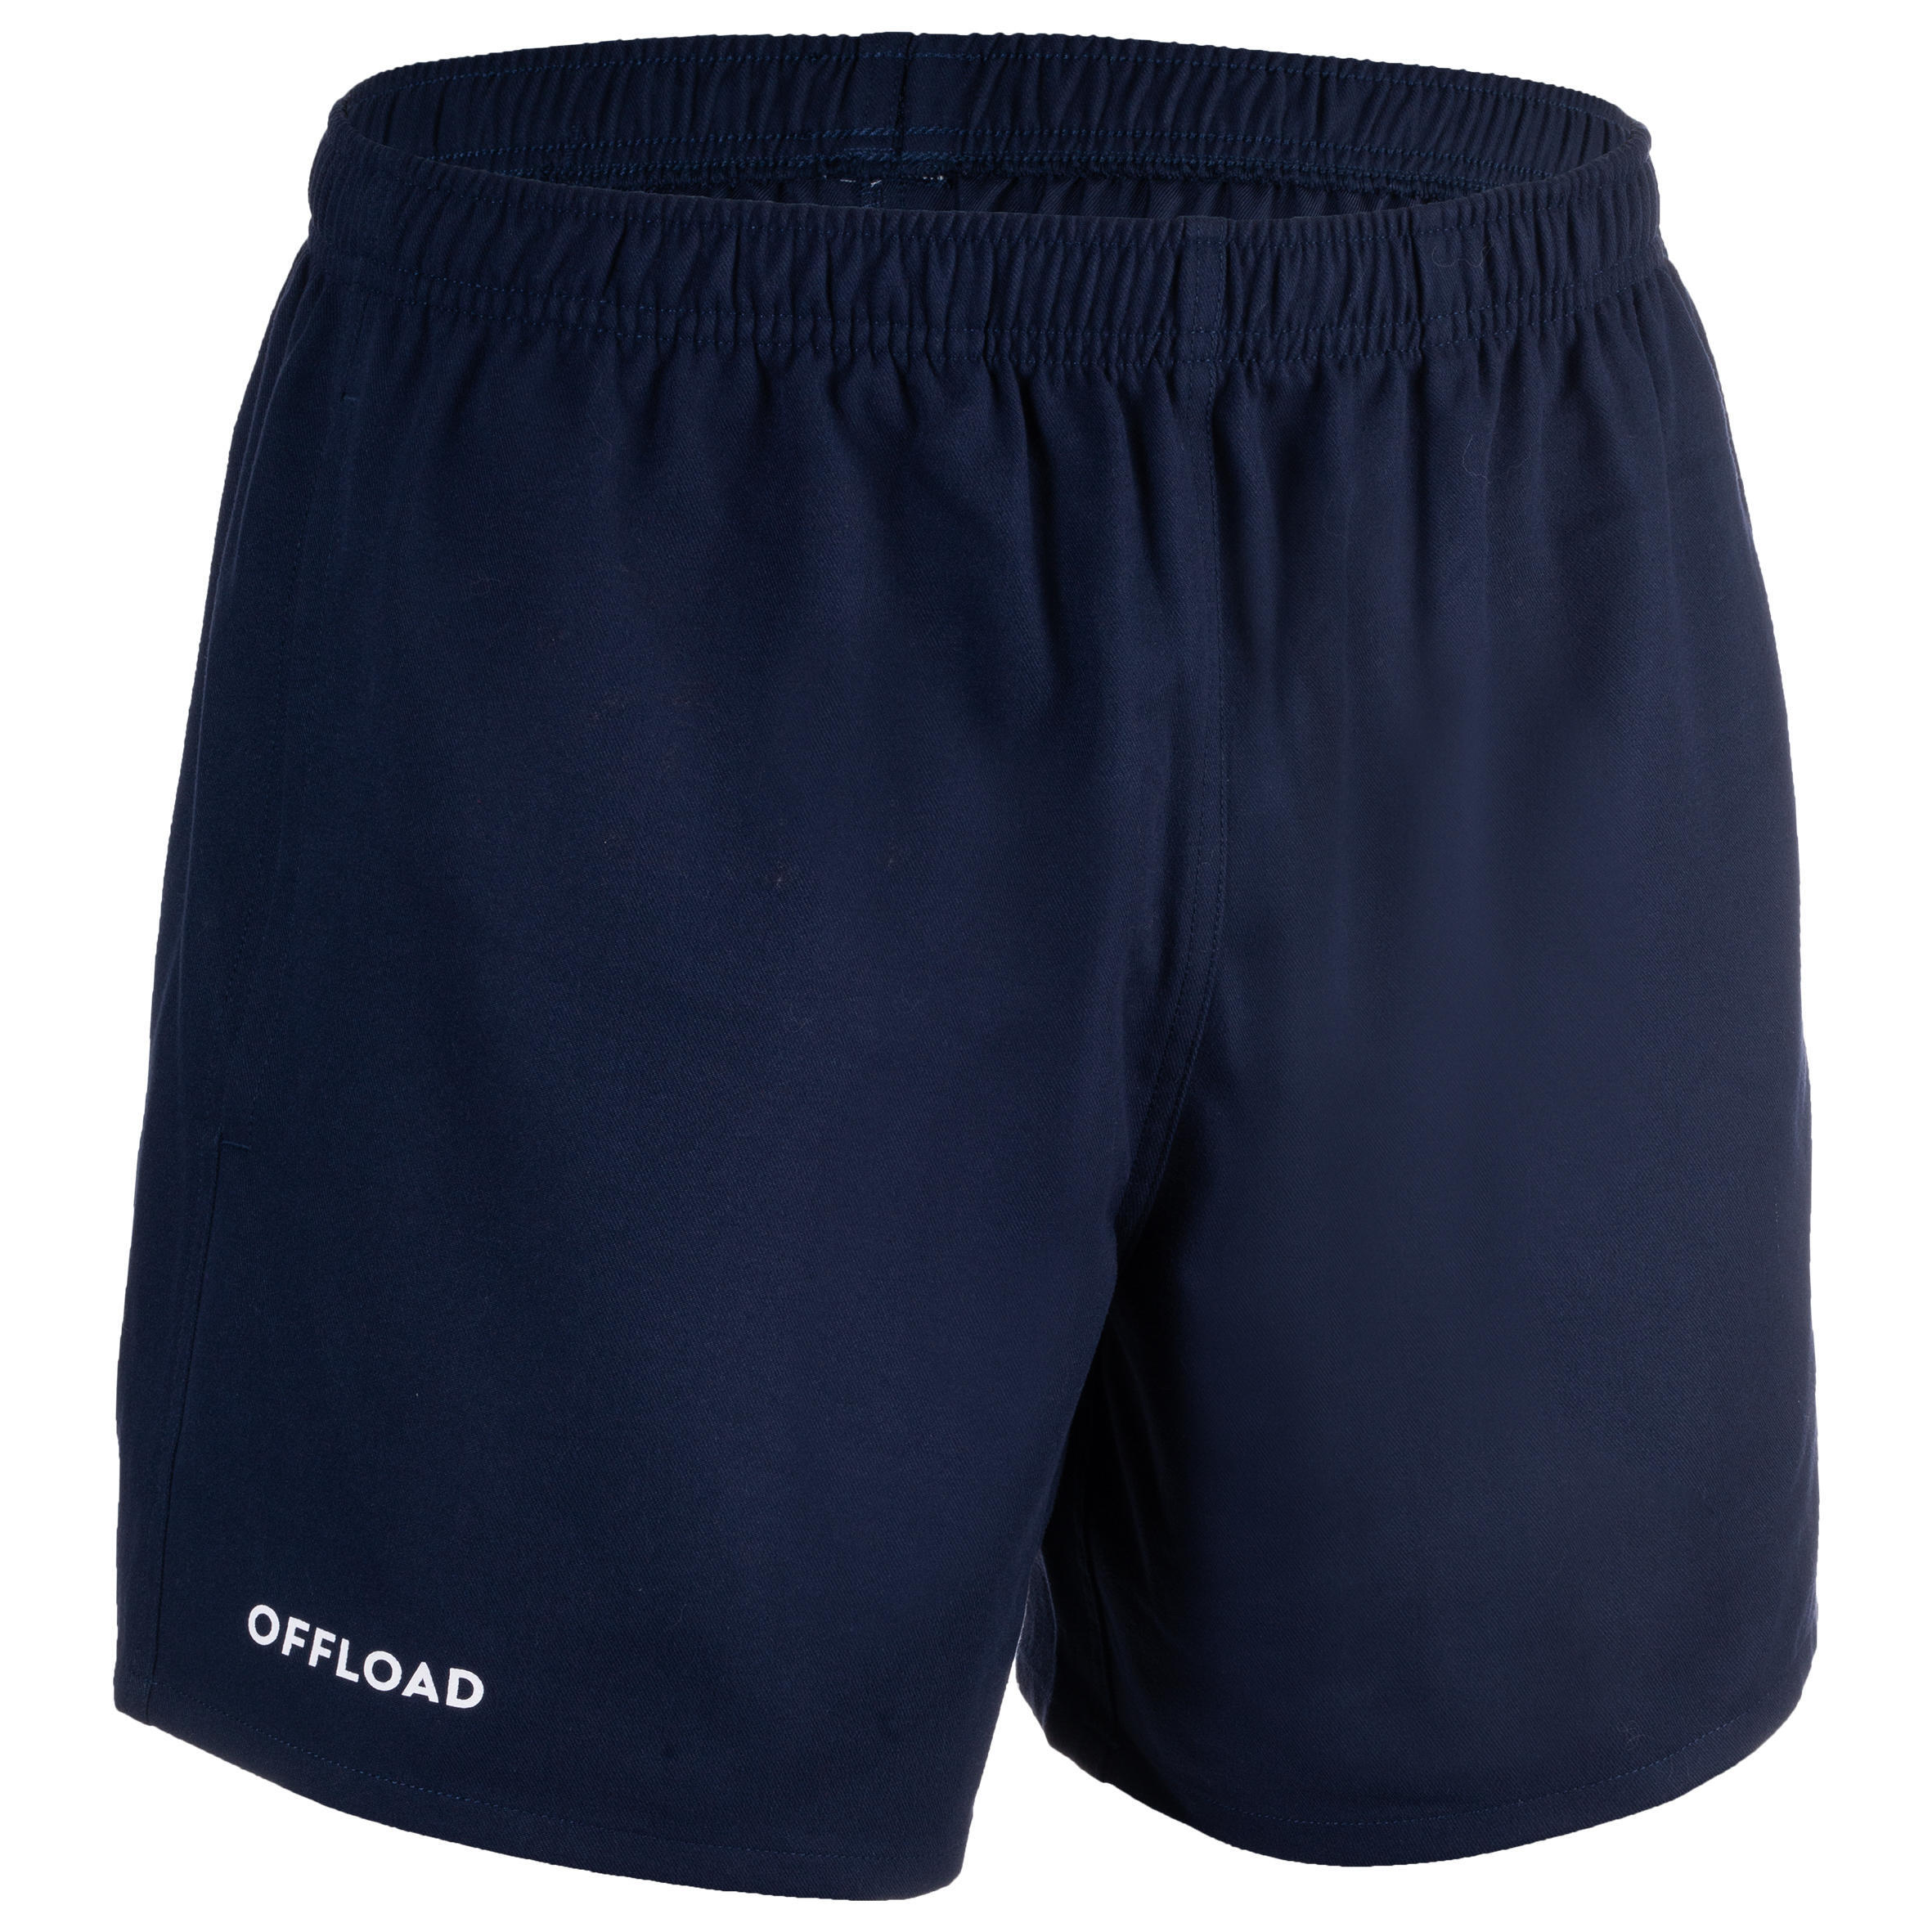 OFFLOAD Adult Pocketless Rugby Shorts R100 - Navy Blue